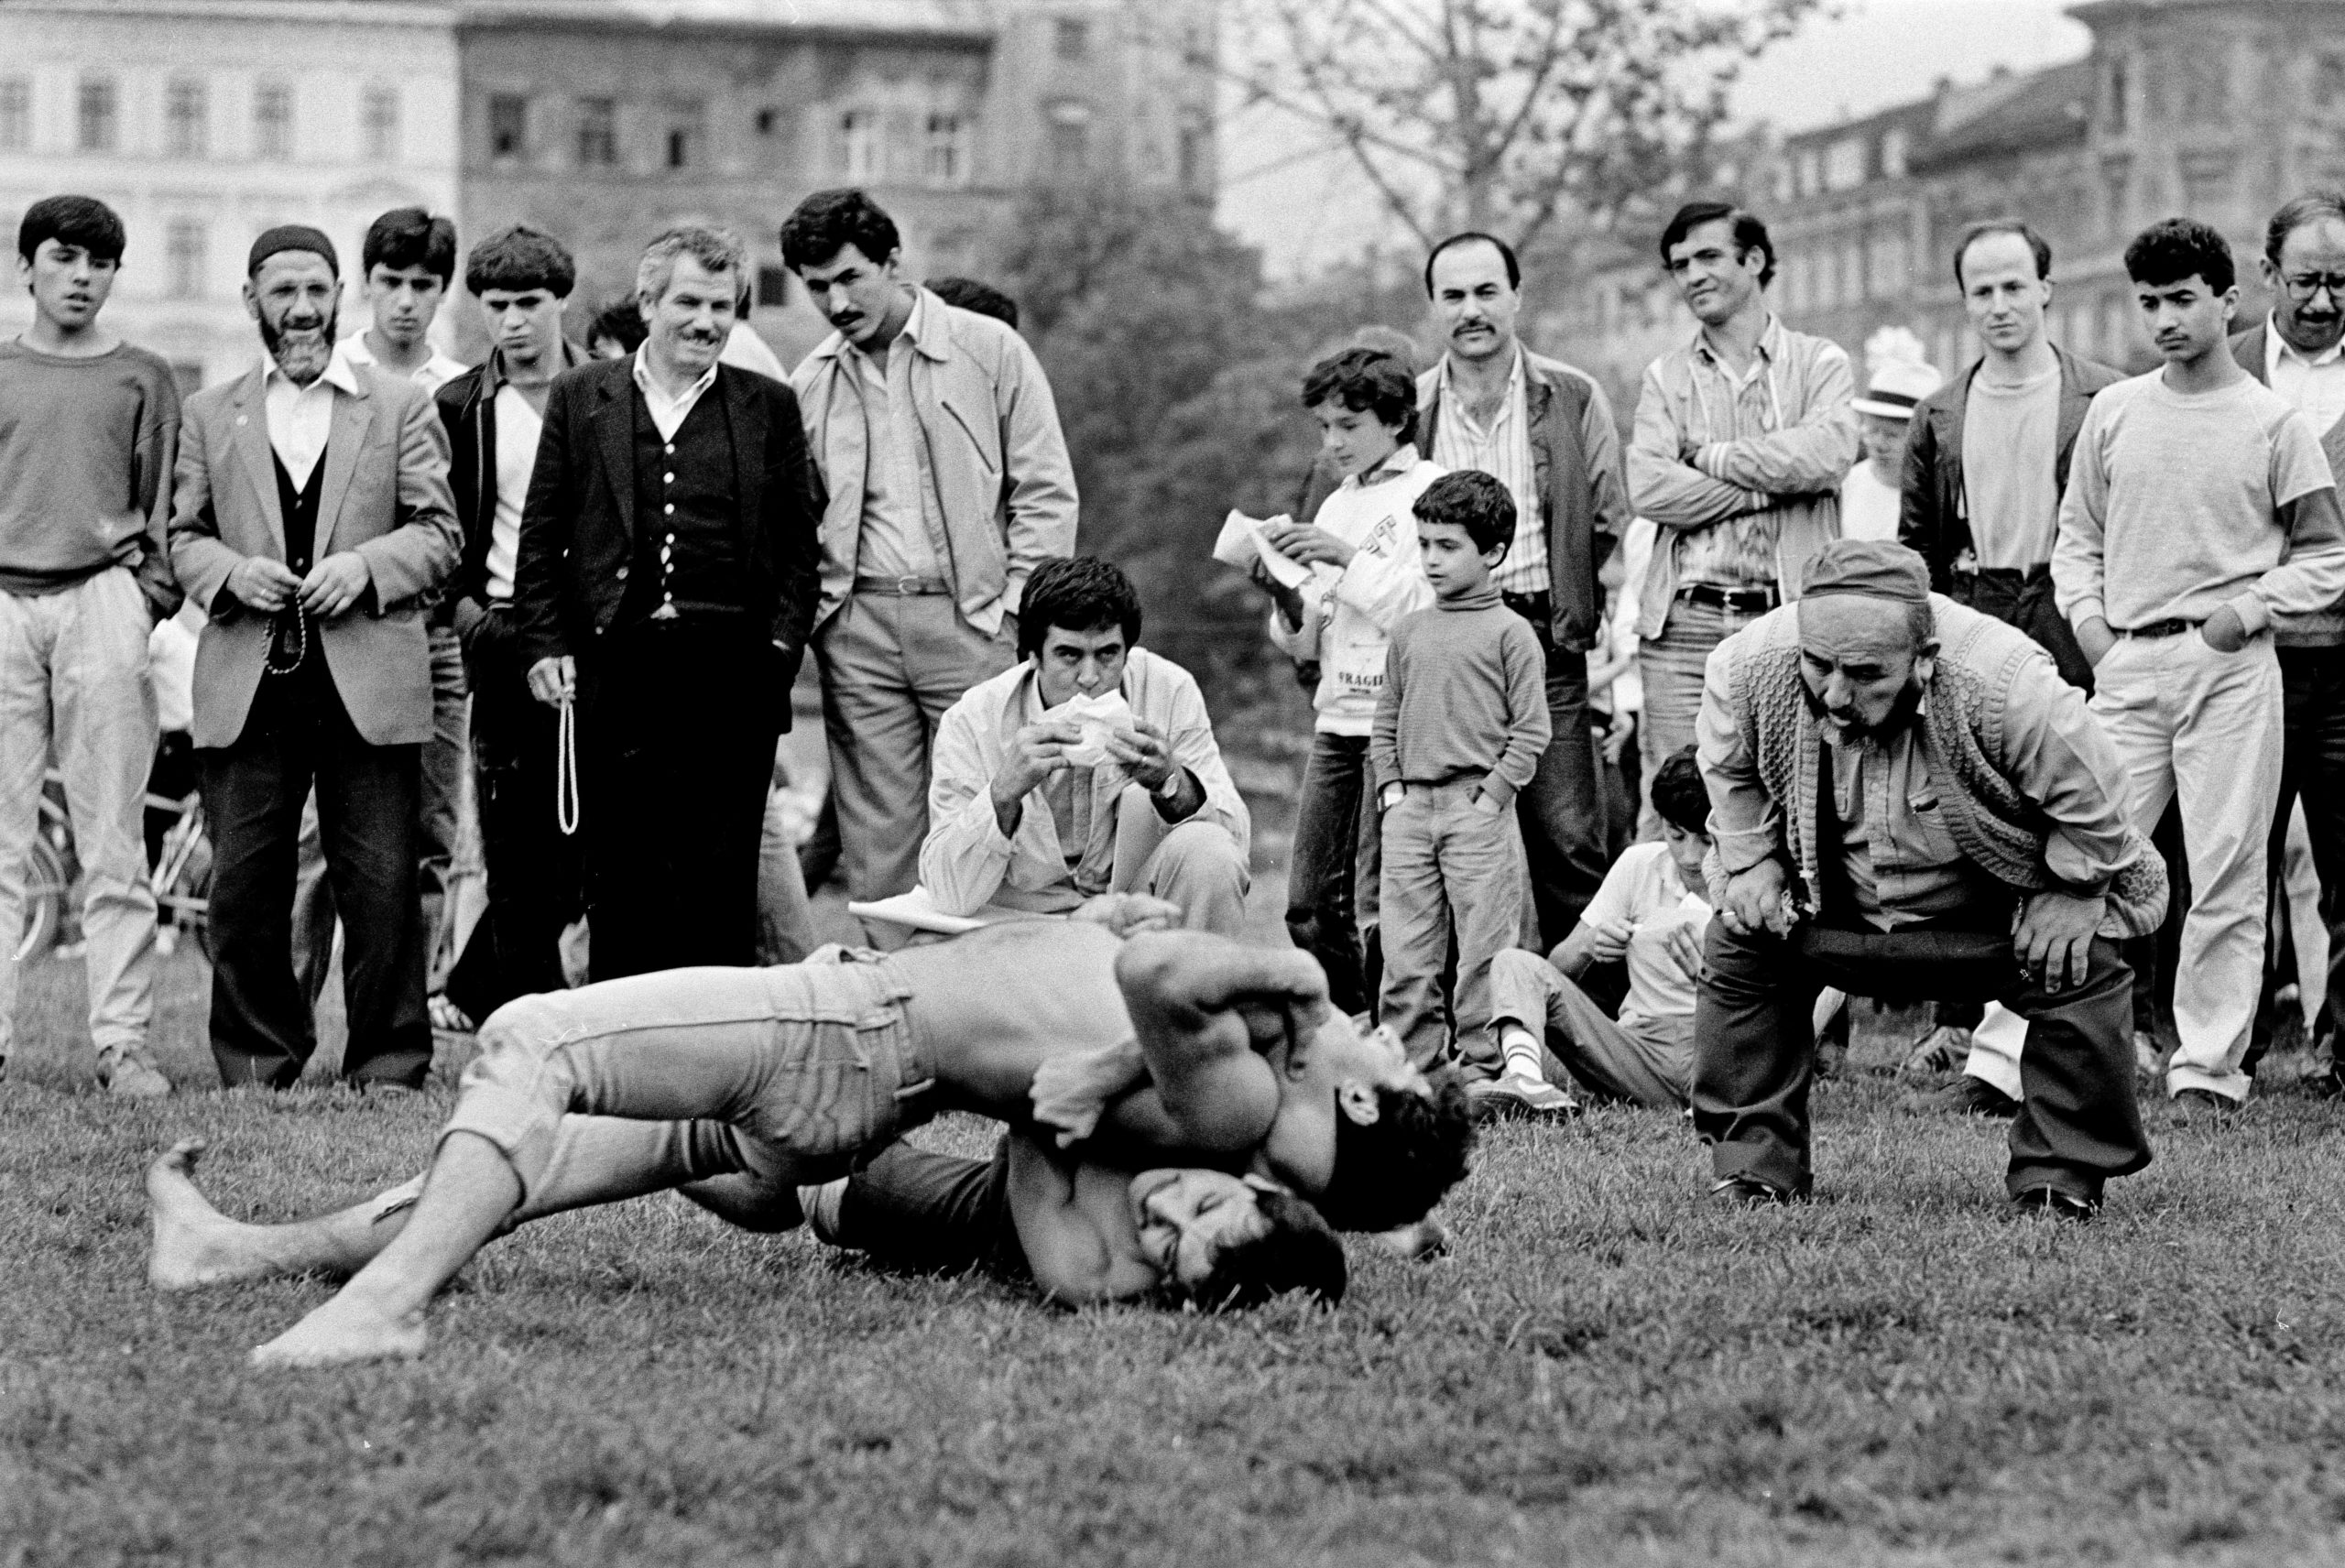 Ölringkämpfe im Görlitzer Park, 1983. Foto: Christian Schulz